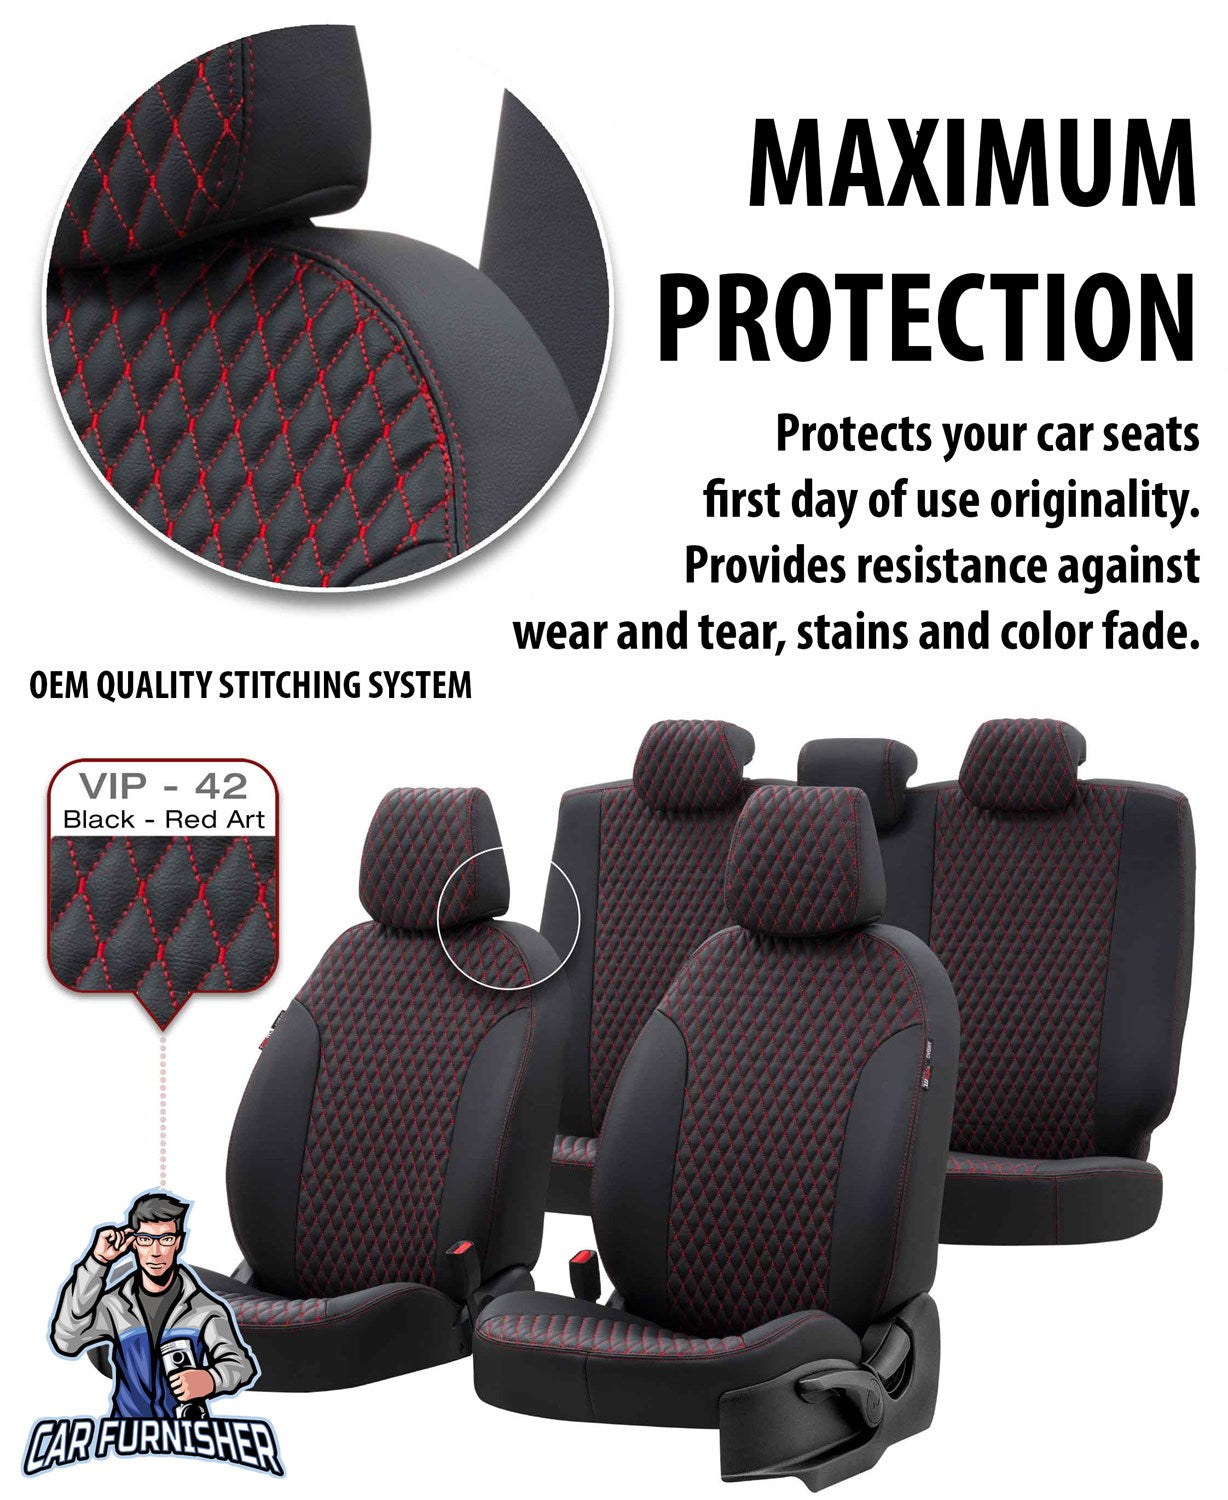 Suzuki Swift Seat Covers Amsterdam Leather Design Black Leather